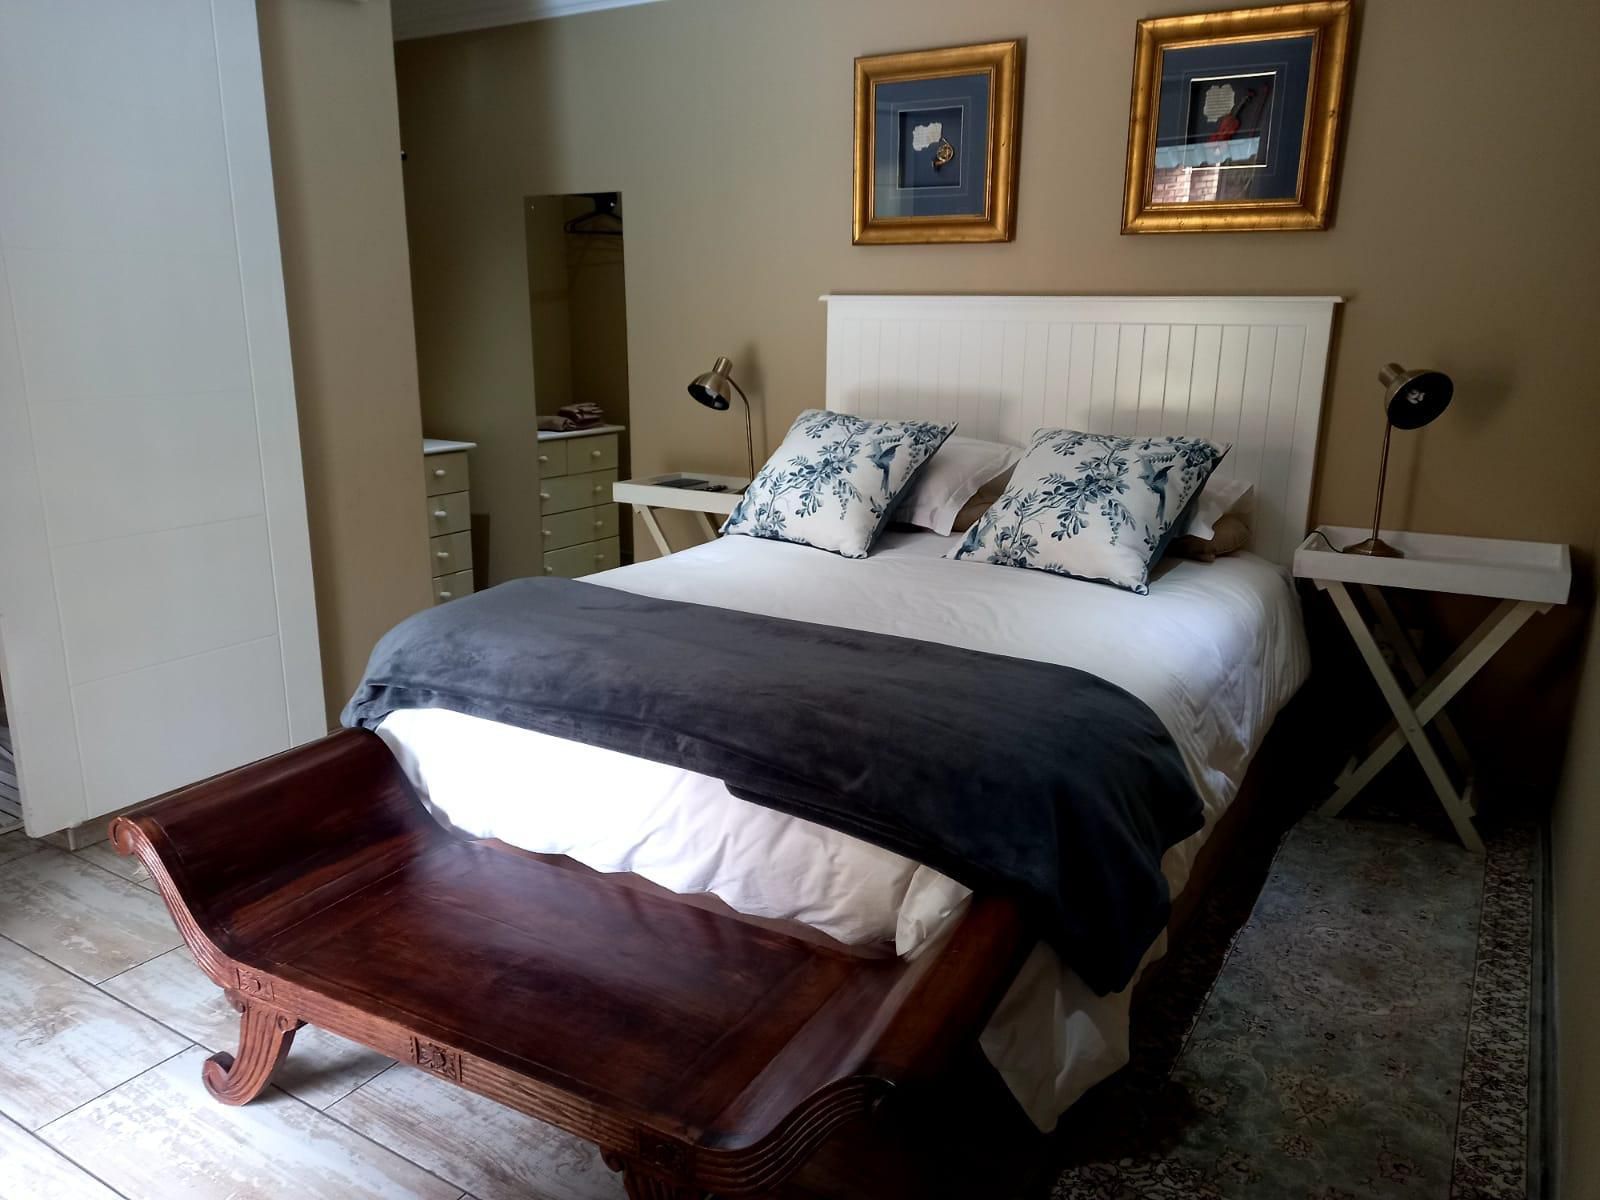 Dormio Manor Guest Lodge Secunda Mpumalanga South Africa Bedroom